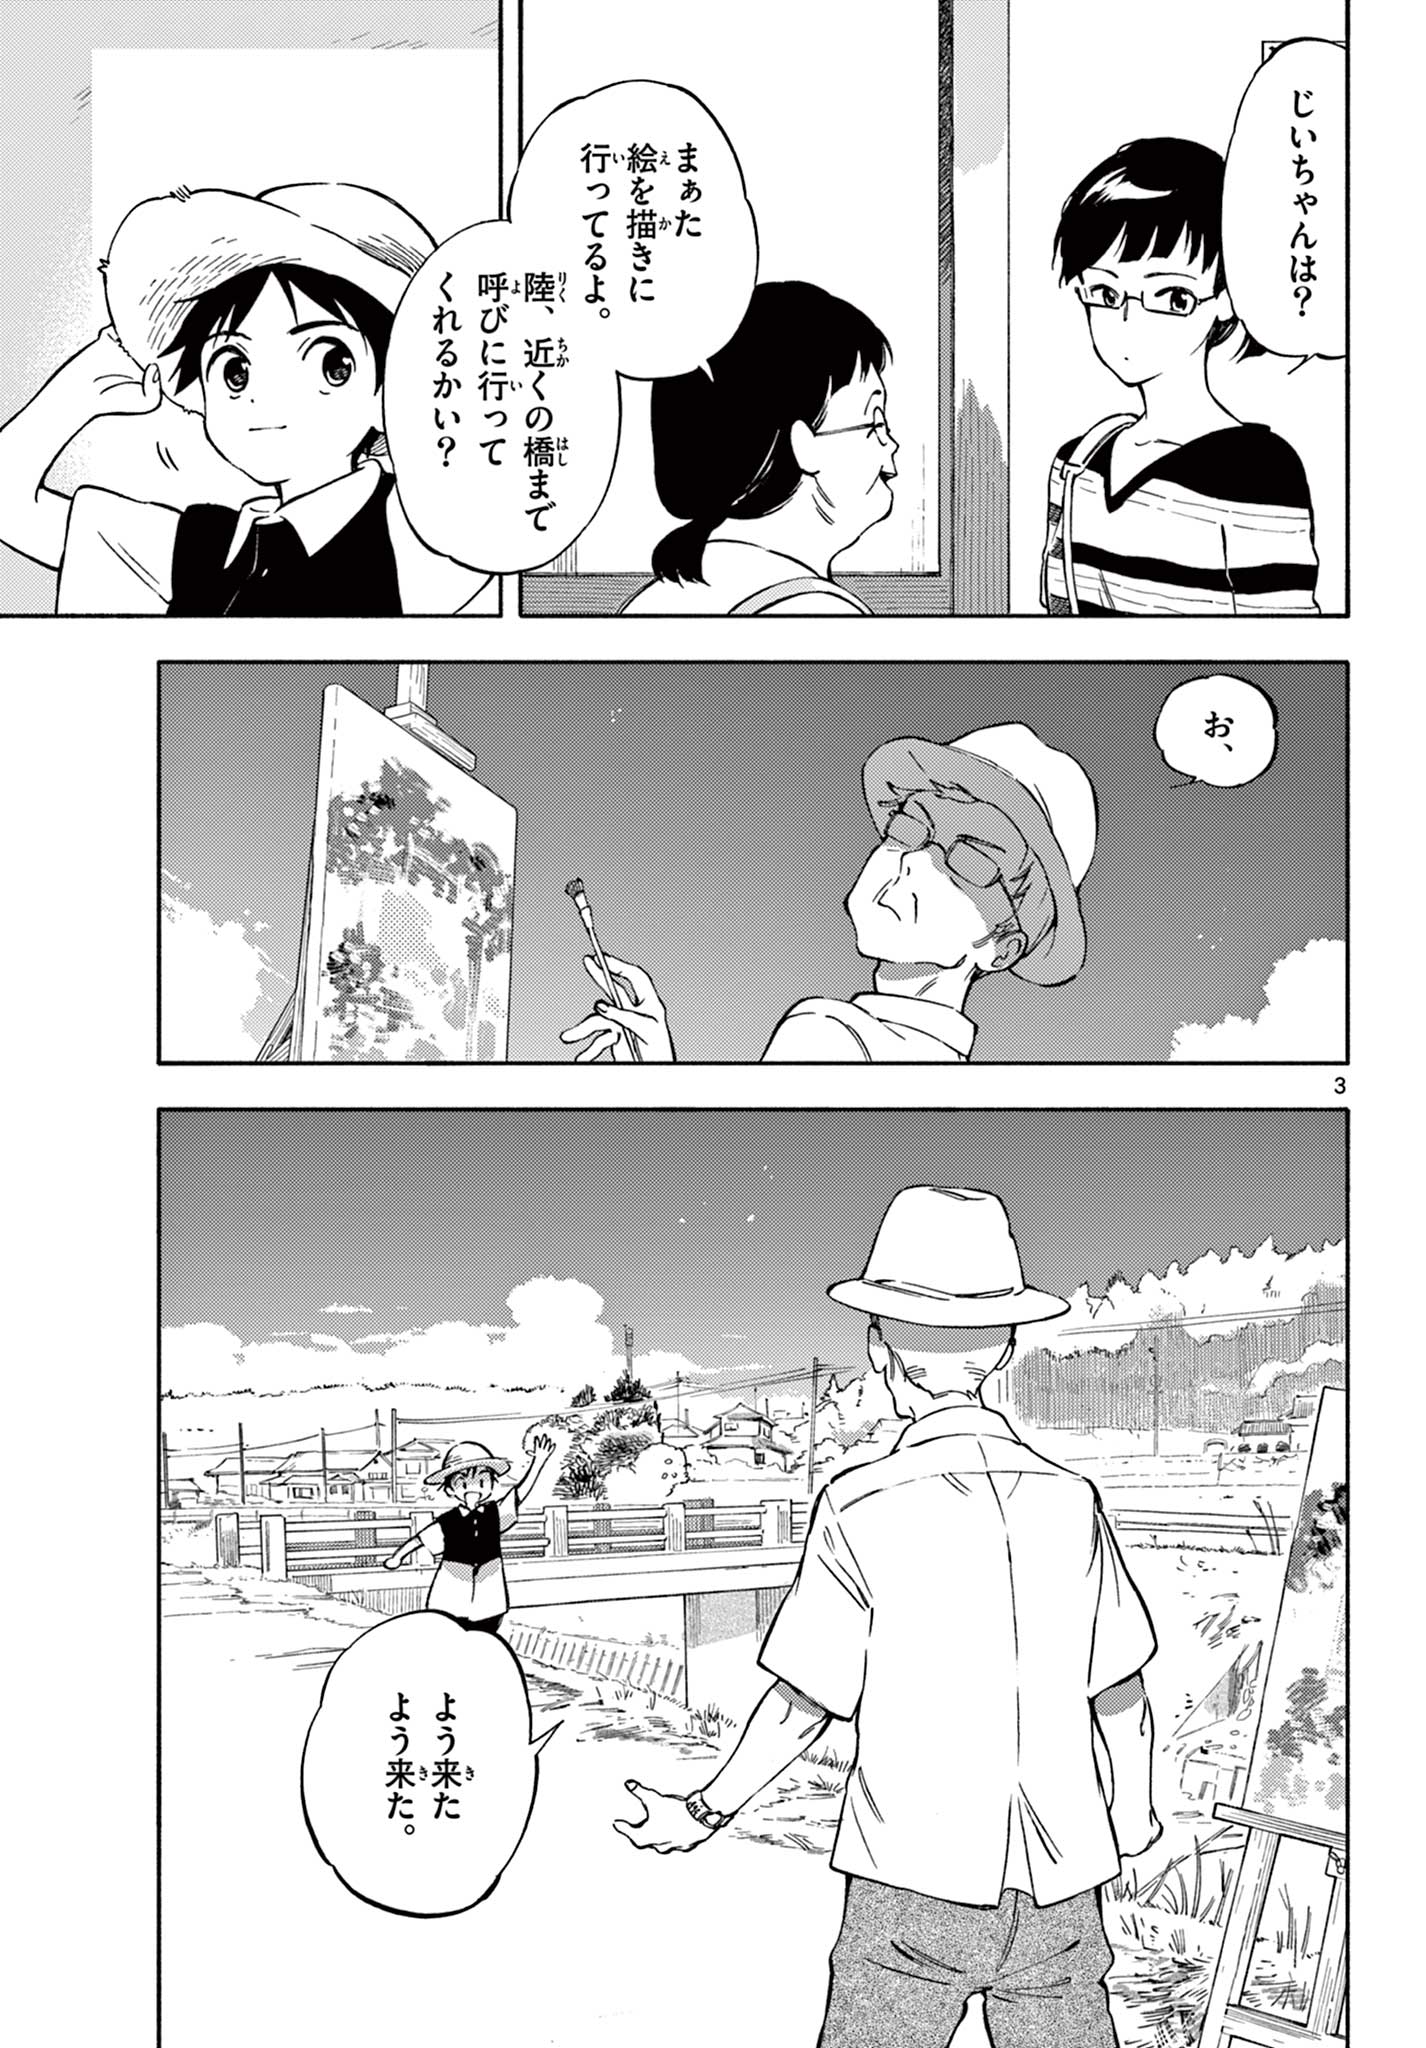 Nami no Shijima no Horizont - Chapter 12.1 - Page 3